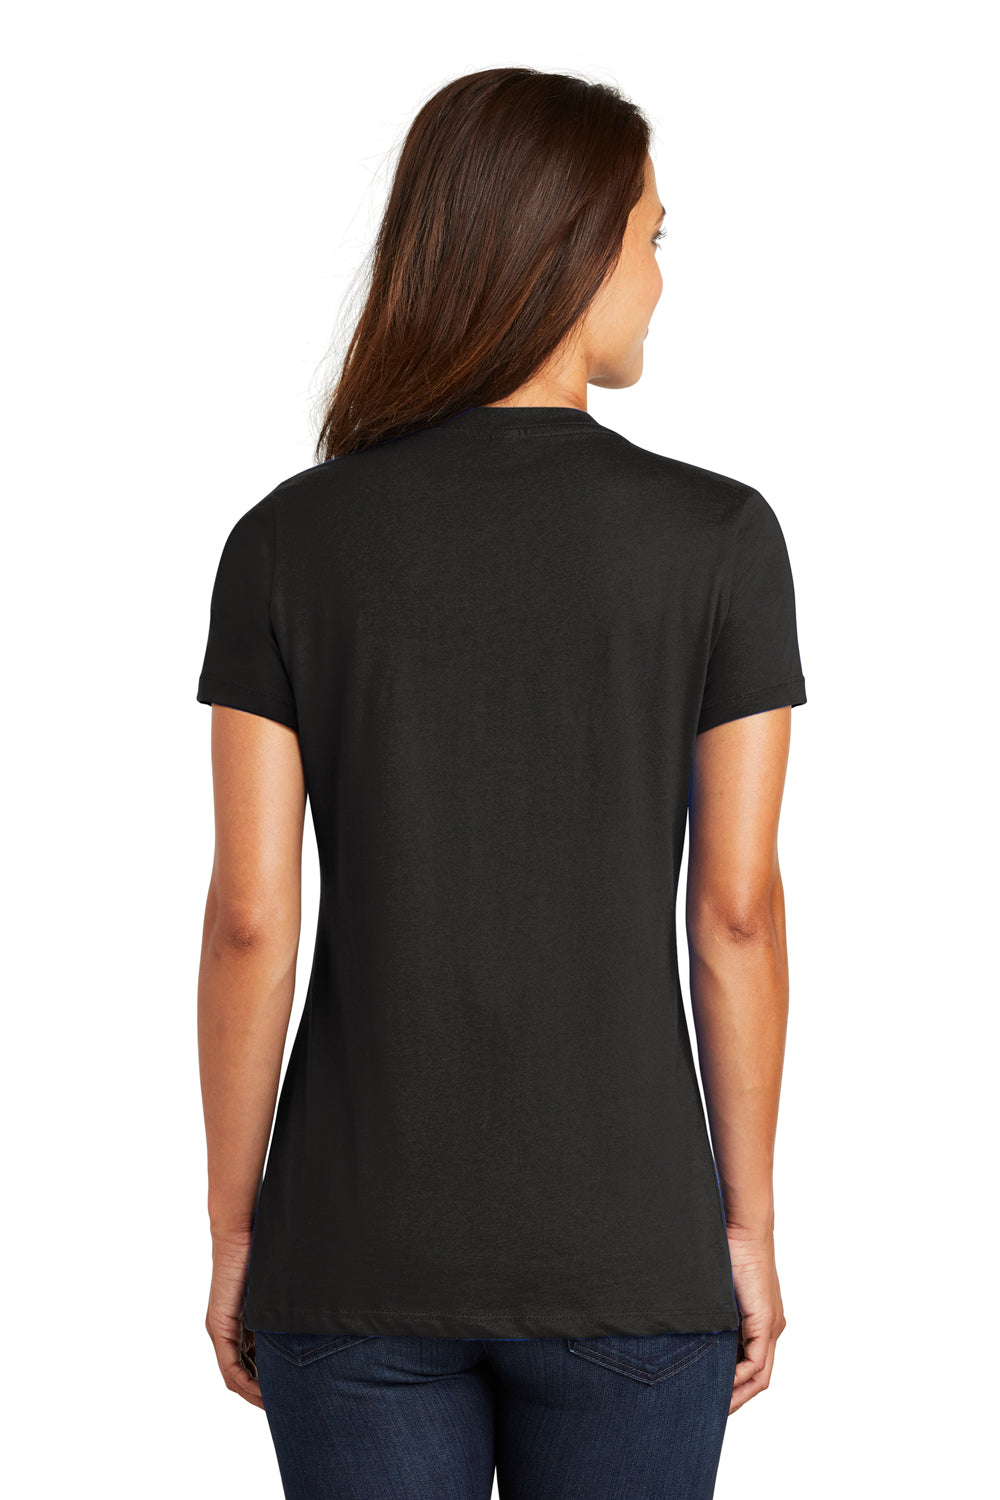 District DM1170L Womens Perfect Weight Short Sleeve V-Neck T-Shirt Black Back